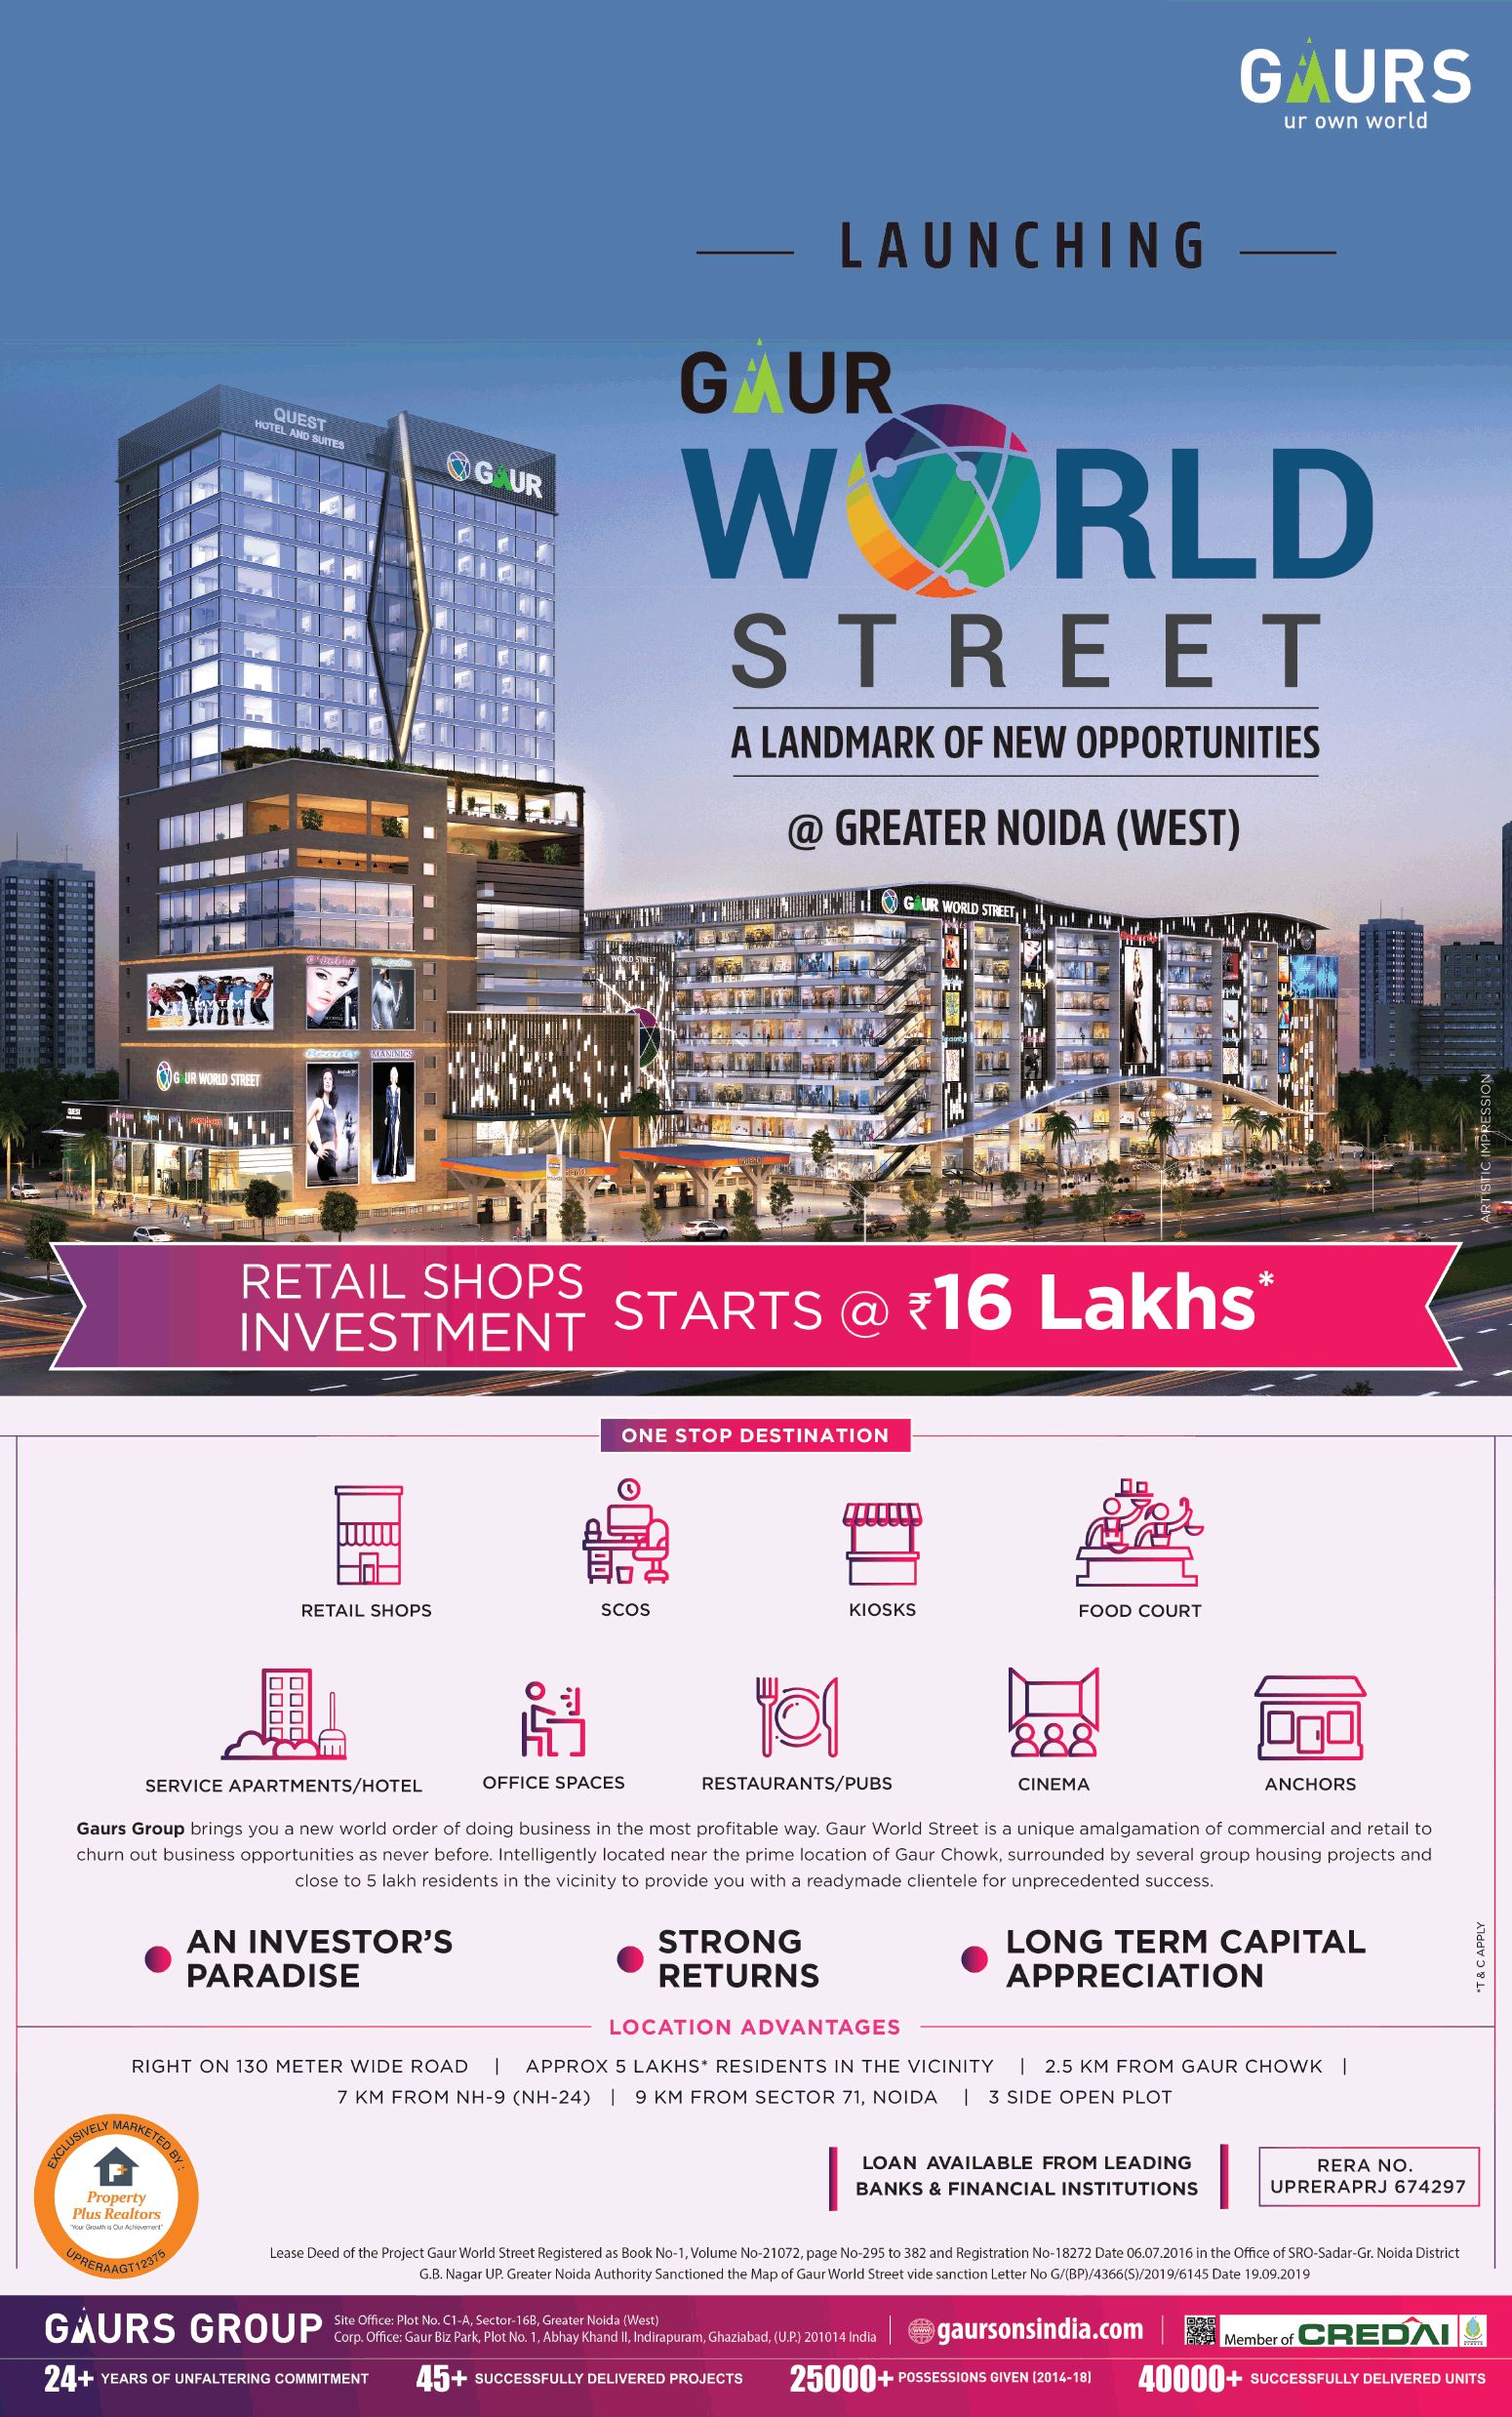 Retail shops investment starts Rs 16 Lac at Gaur World Street, Noida Update